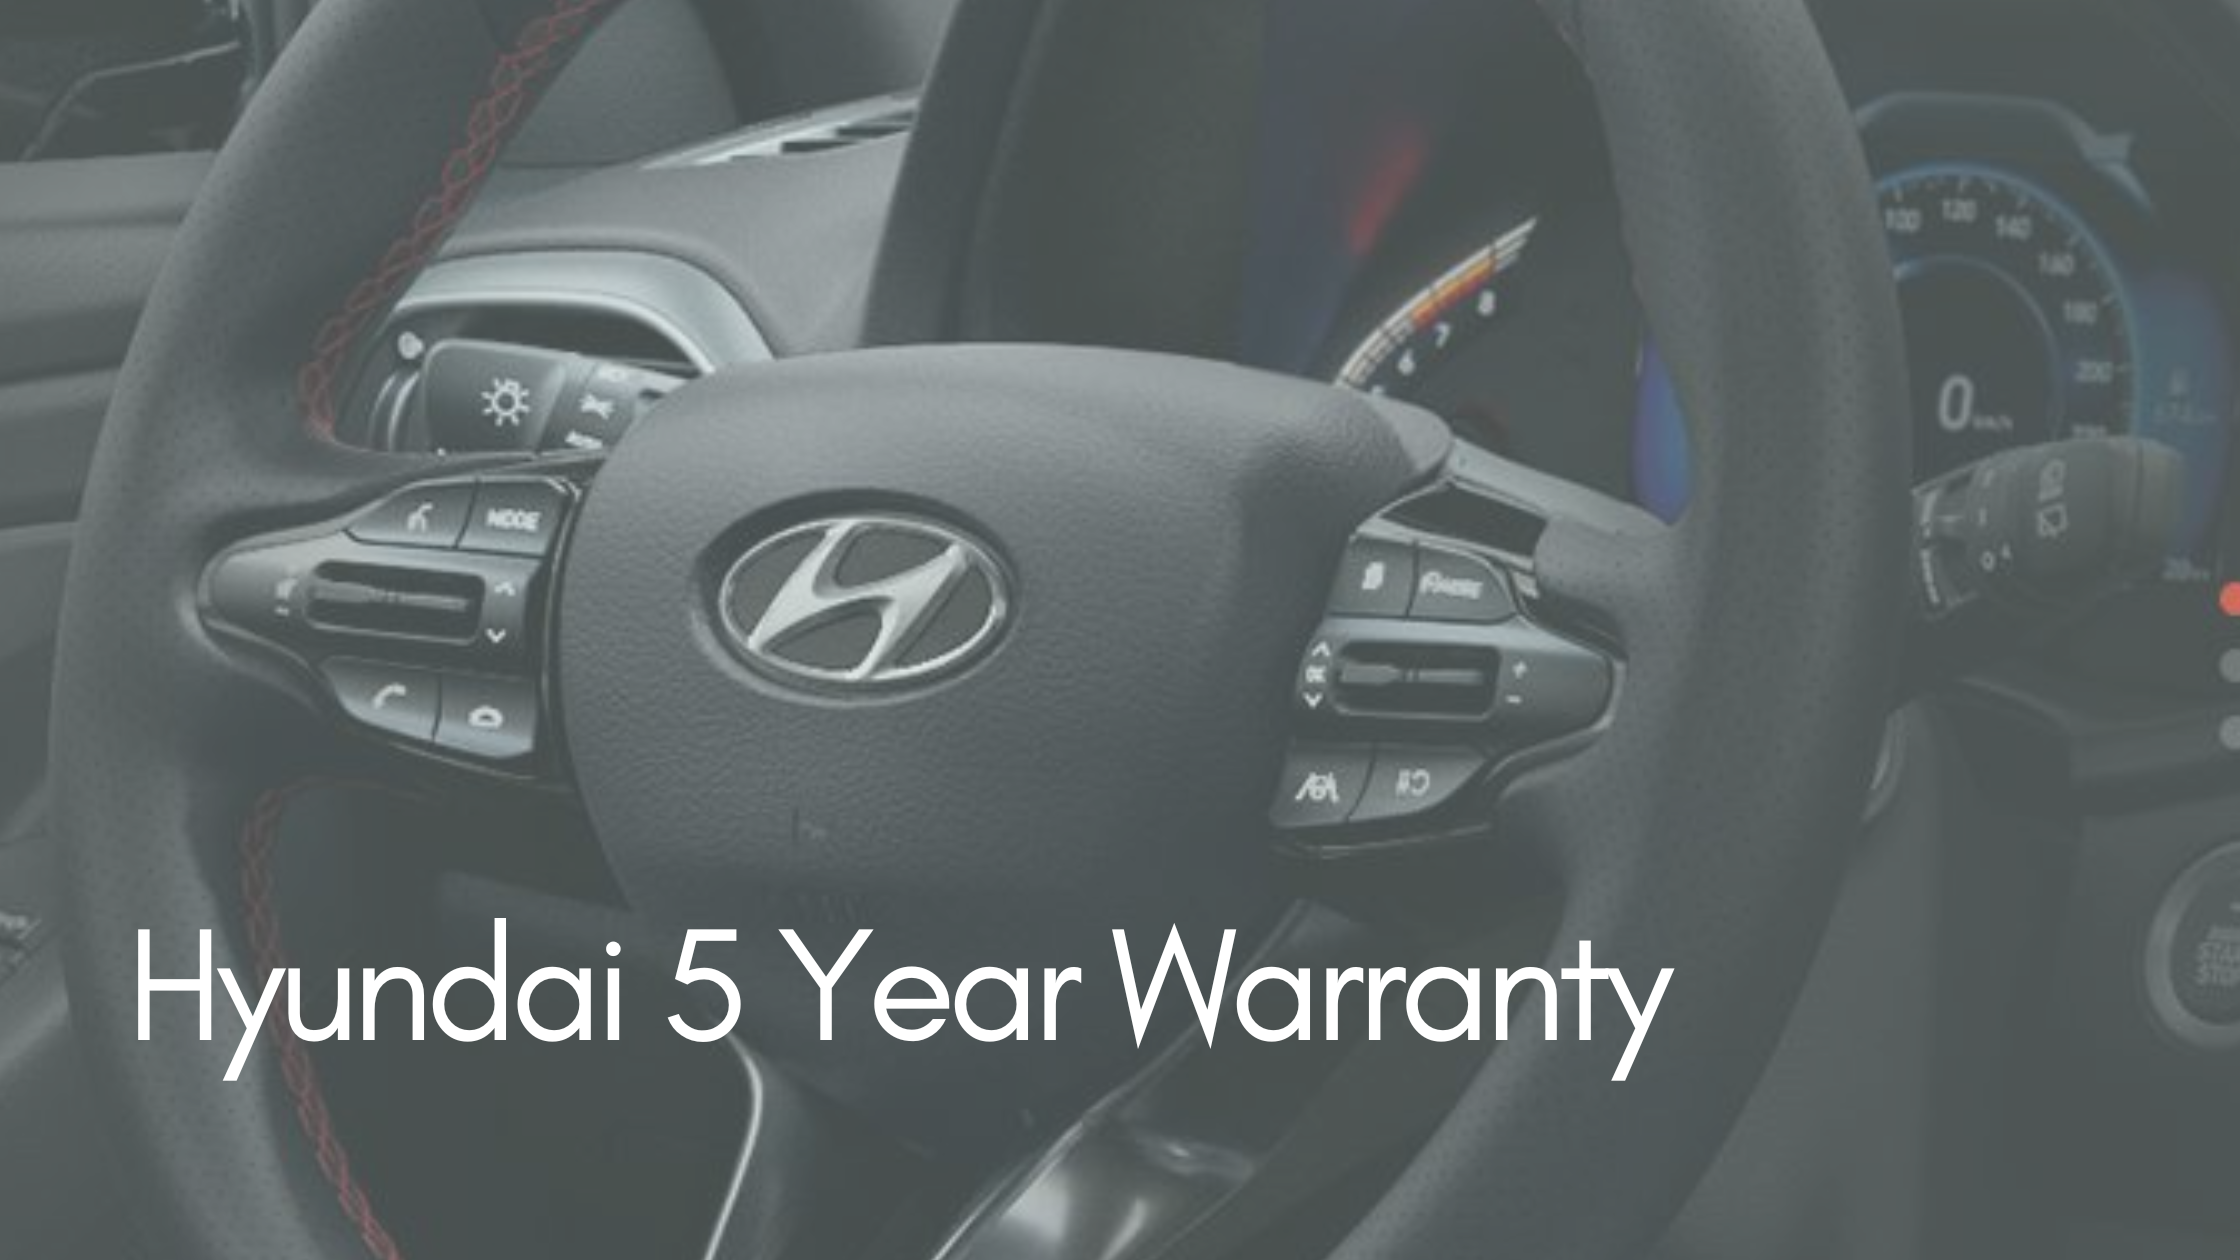 Hyundai's 5 Year Warranty